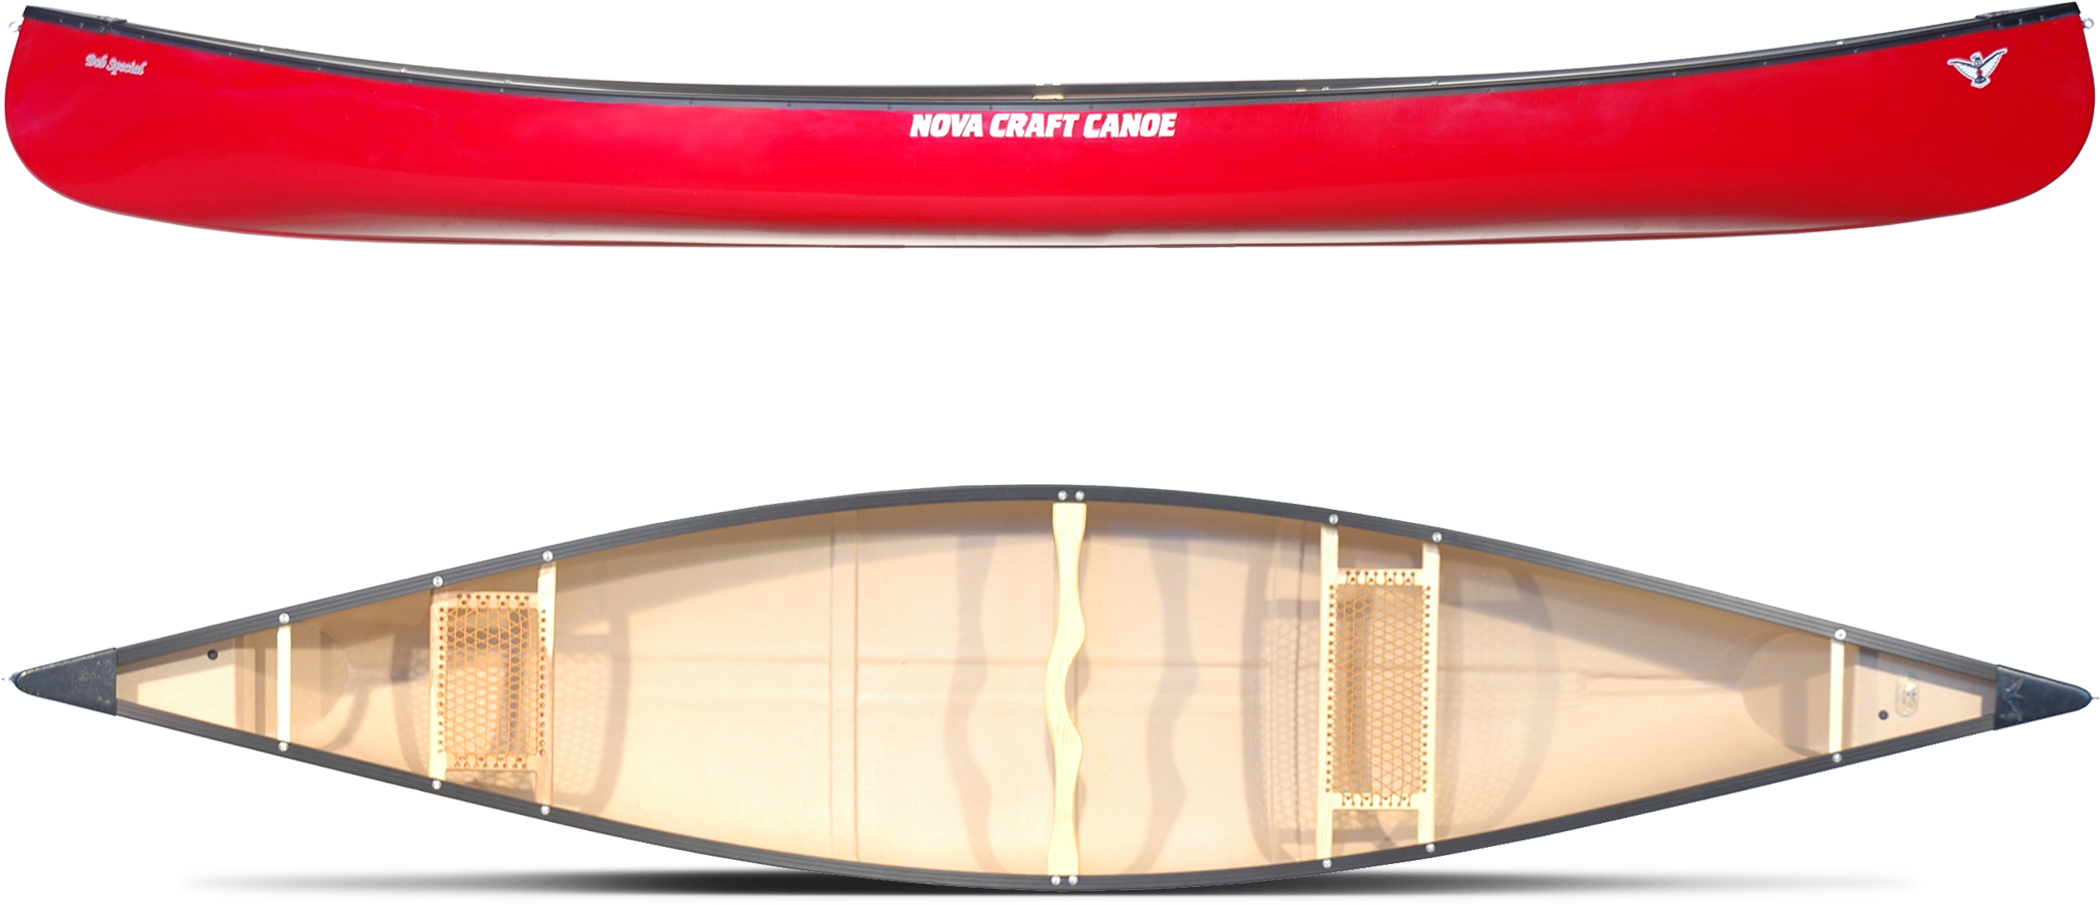 Red Nova Craft Canoe Topand Side View